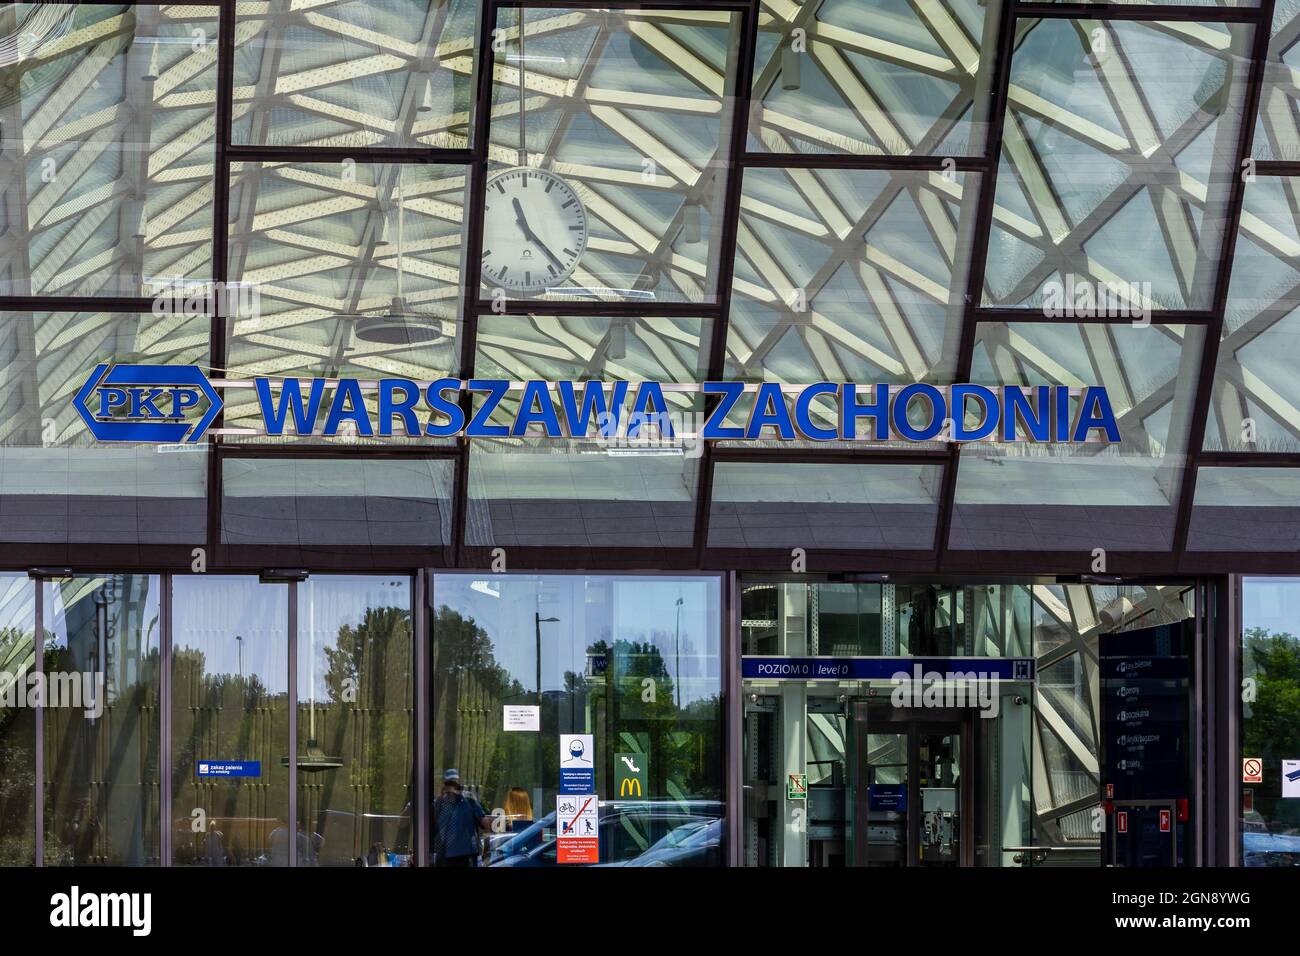 Warsaw, Poland, 09.07.2021. PKP Warszawa Zachodnia, Warsaw West train and bus station new modern glass building with PKP logo, entrance. Stock Photo